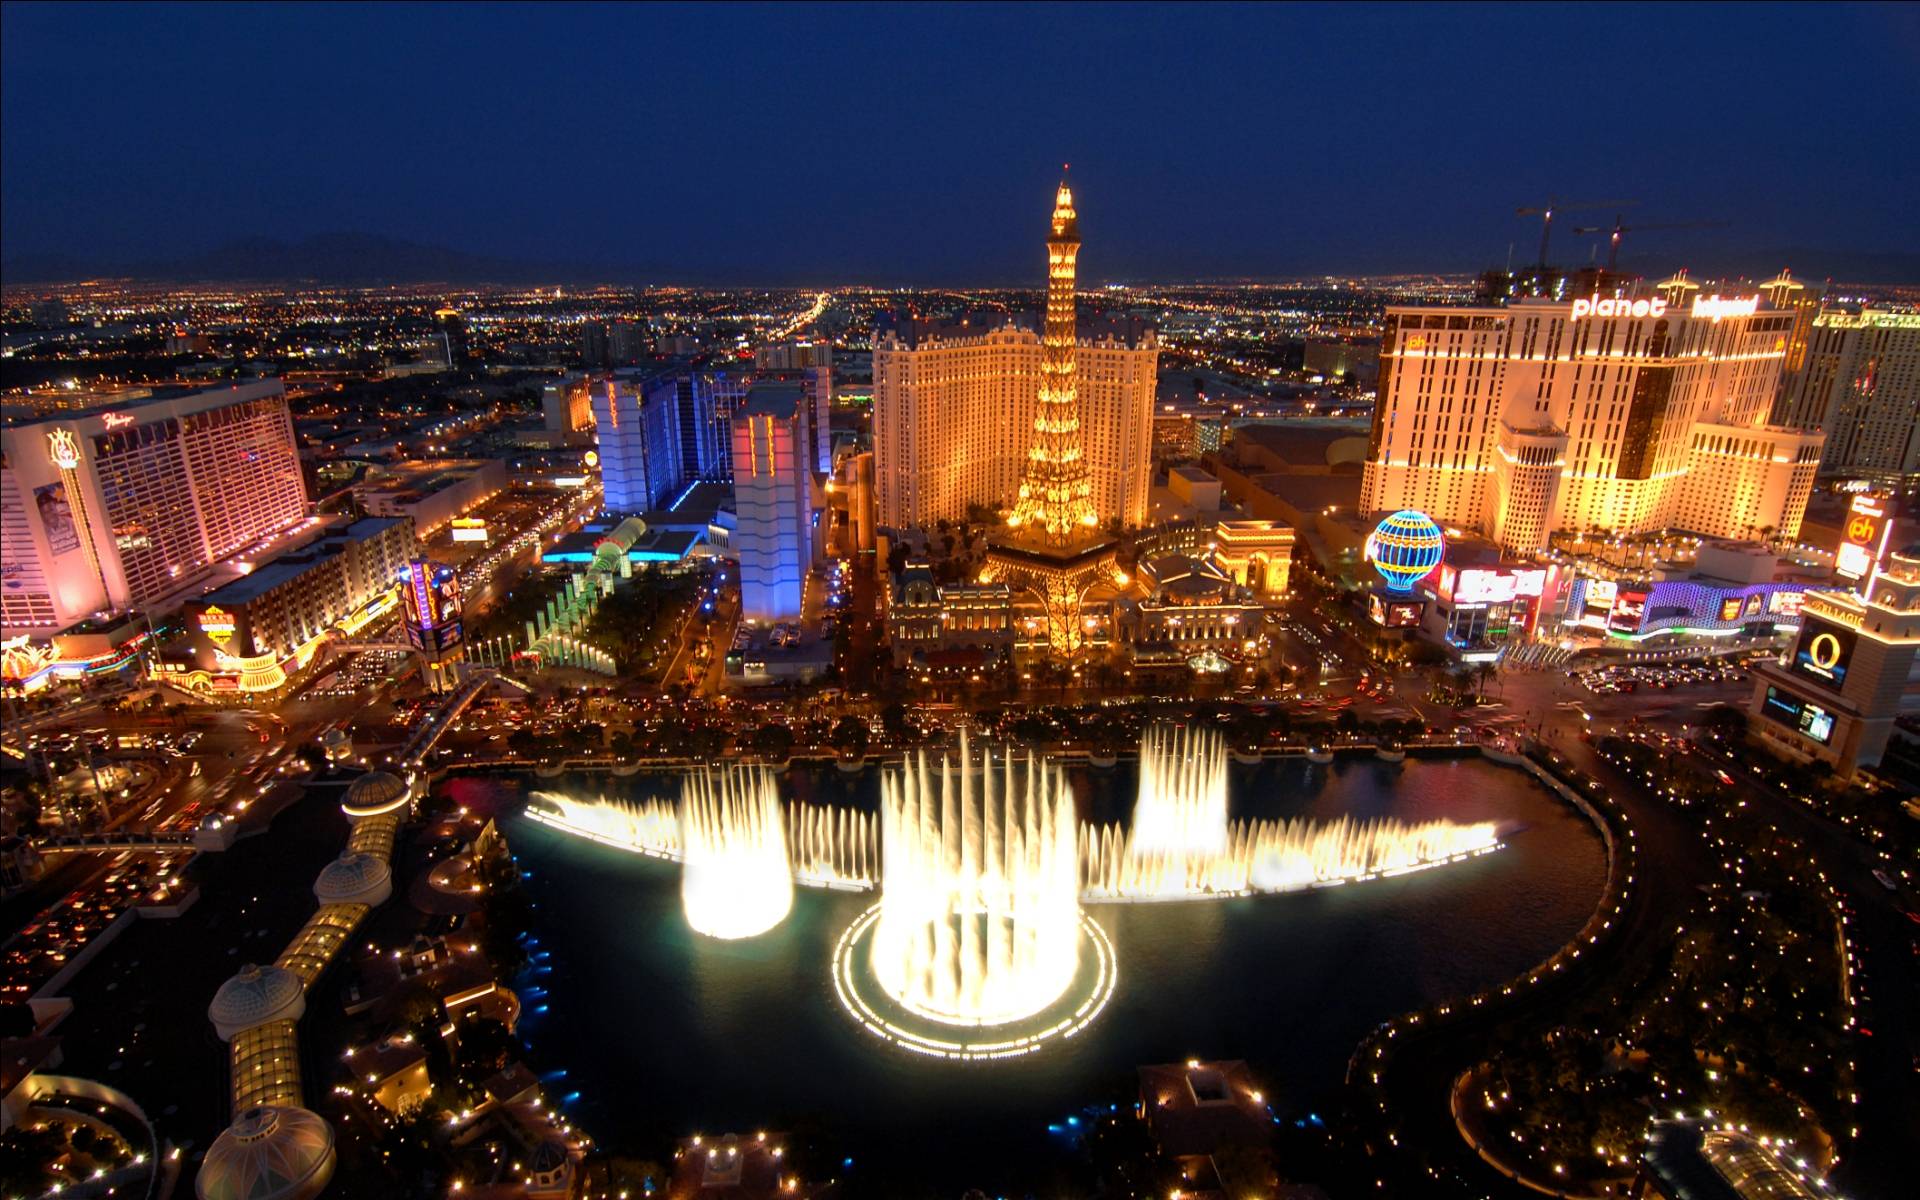 Bellagio Fountain And Hotel Paris Las Vegas Overnight Nevada North America Desktop Backgrounds 19x10 Wallpapers13 Com